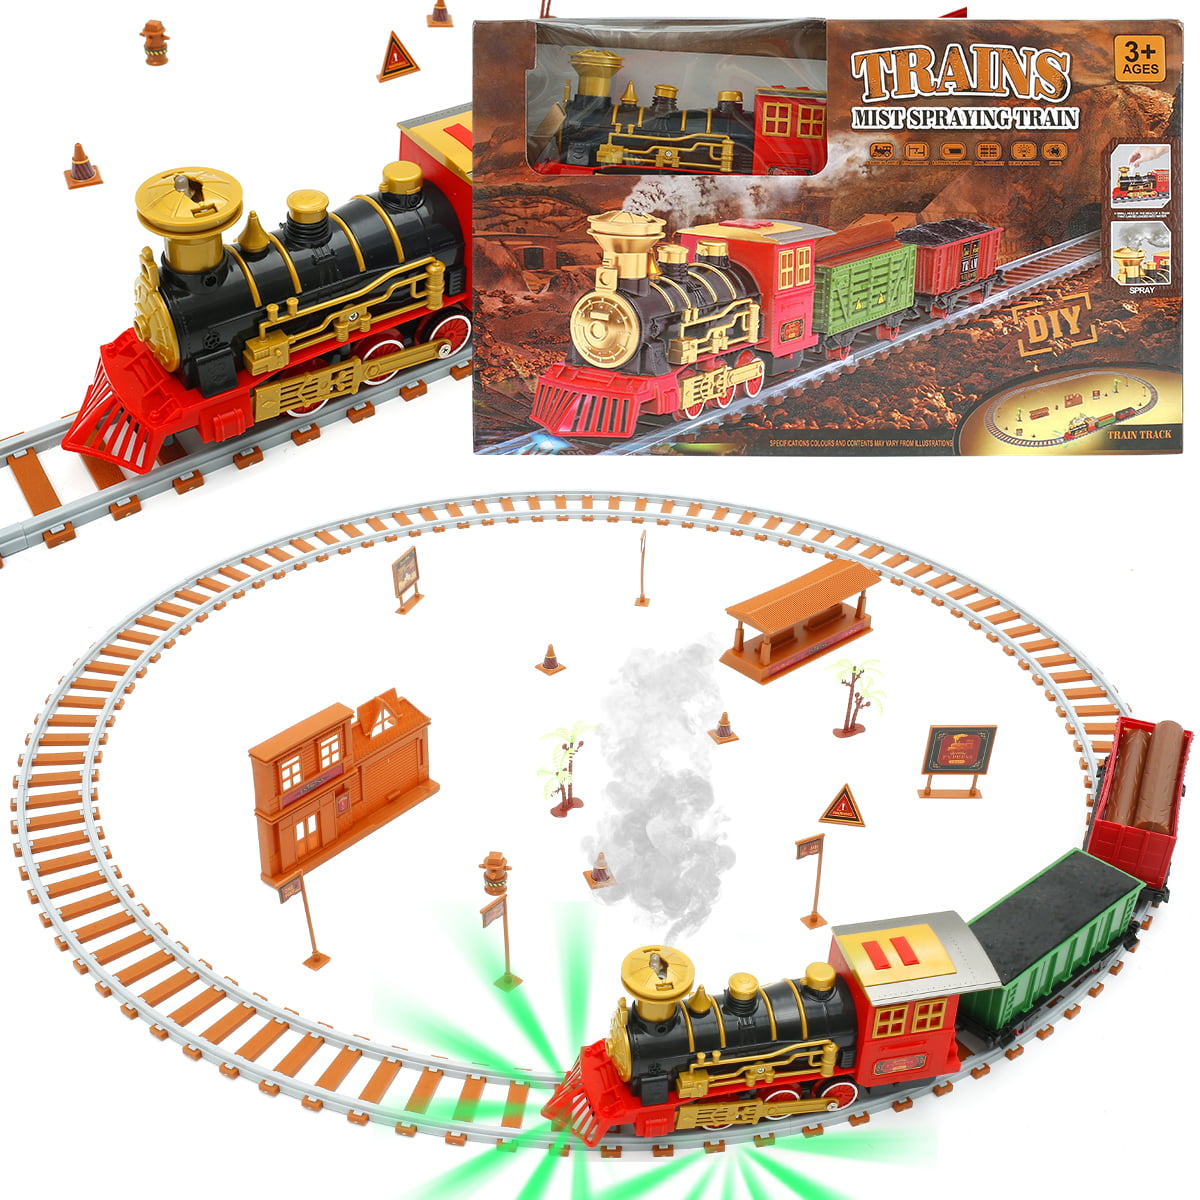 Electric Christmas Train Track Set W/ Light Sound Real Smoke Kids Toy Under Tree 